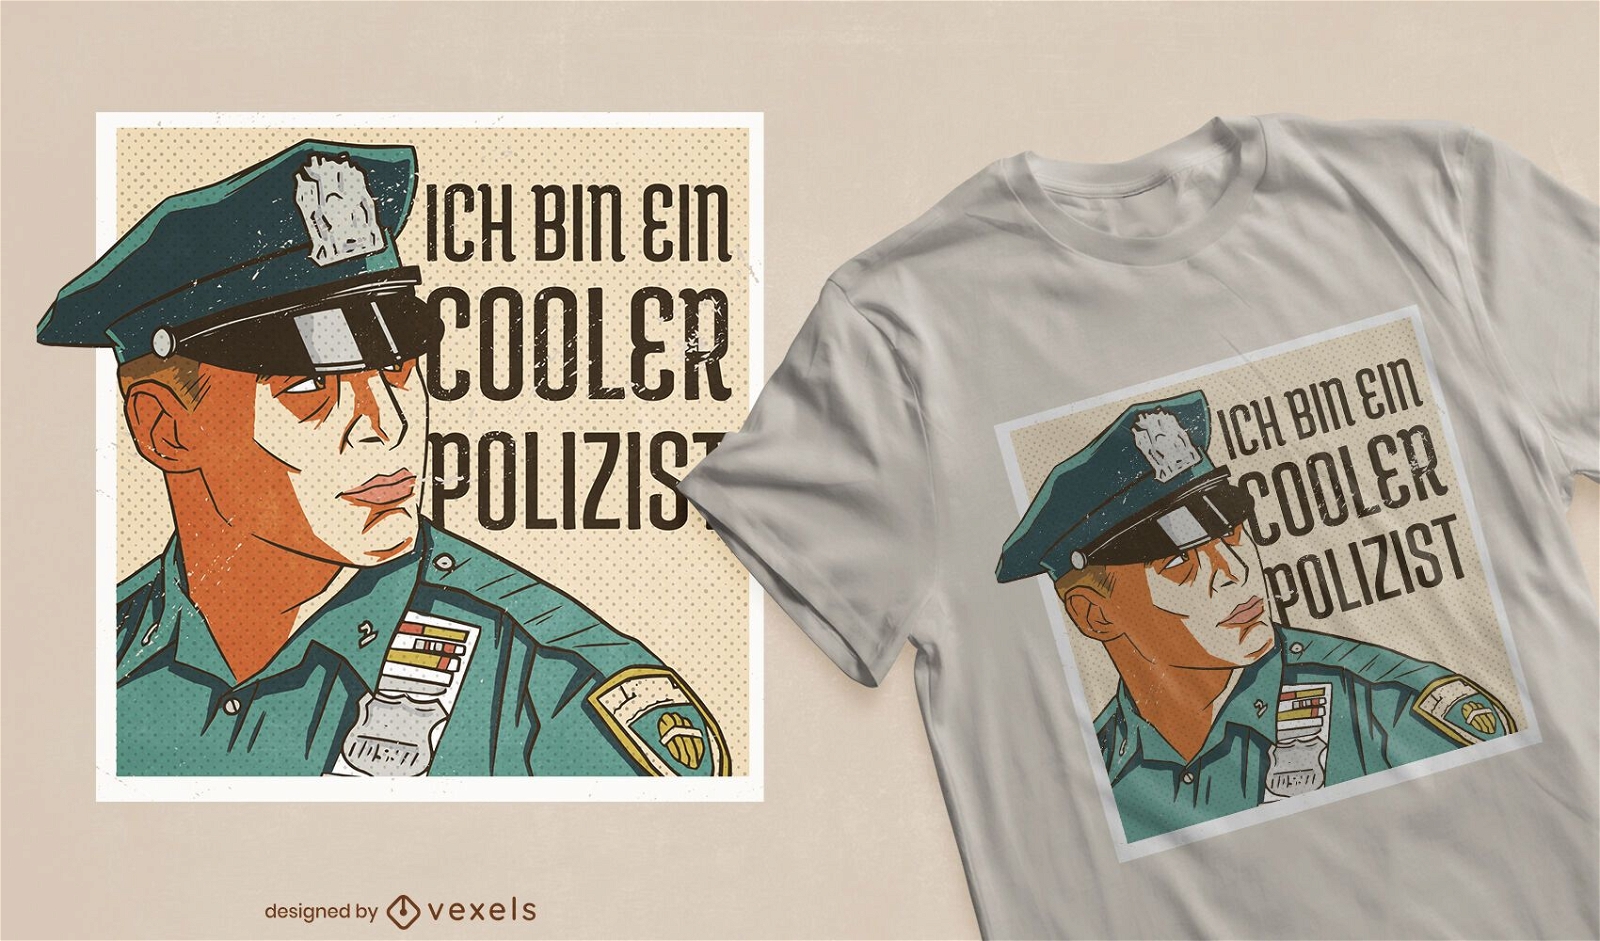 Genial dise?o de camiseta de polic?a alemana.